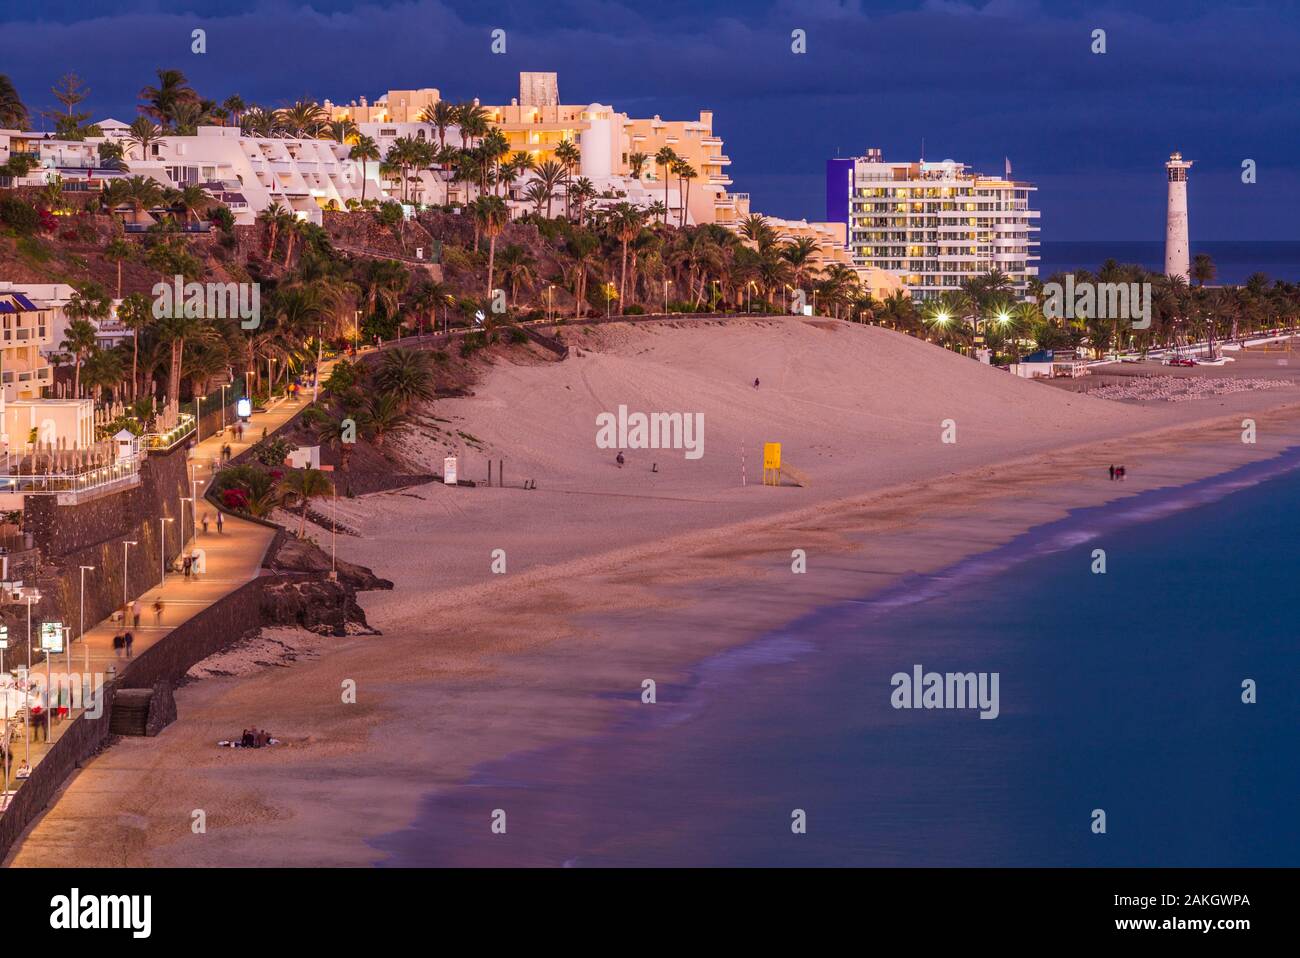 Spain, Canary Islands, Fuerteventura Island, Morro Jable, of Playa de la Cebada beach, dusk Stock Photo